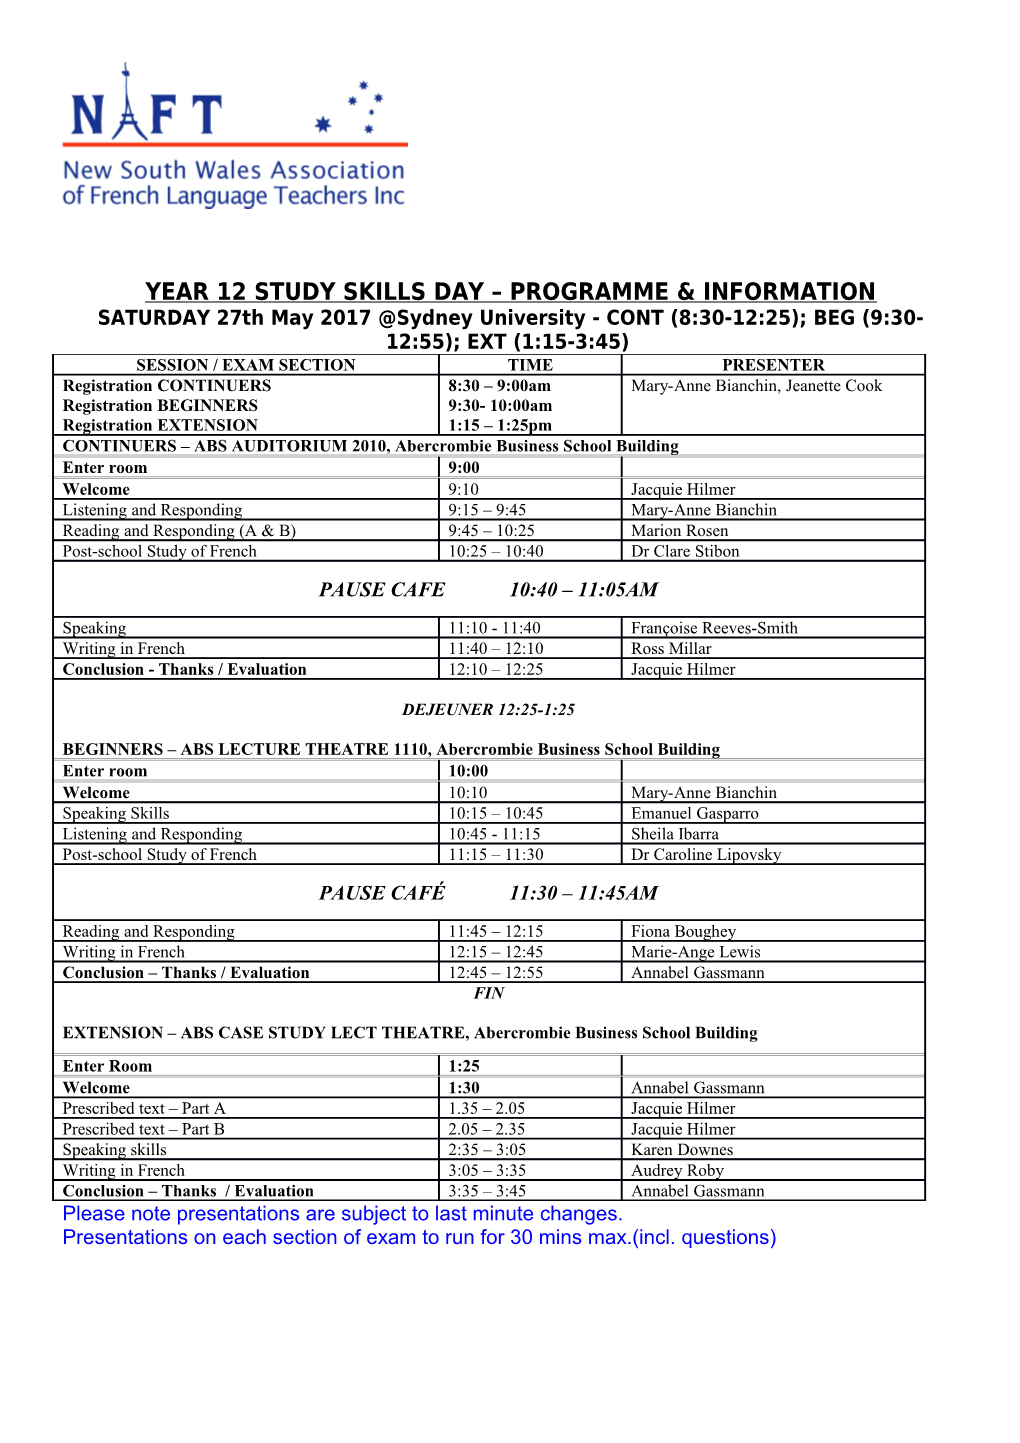 Year 12 Study Skills Day Programme & Information